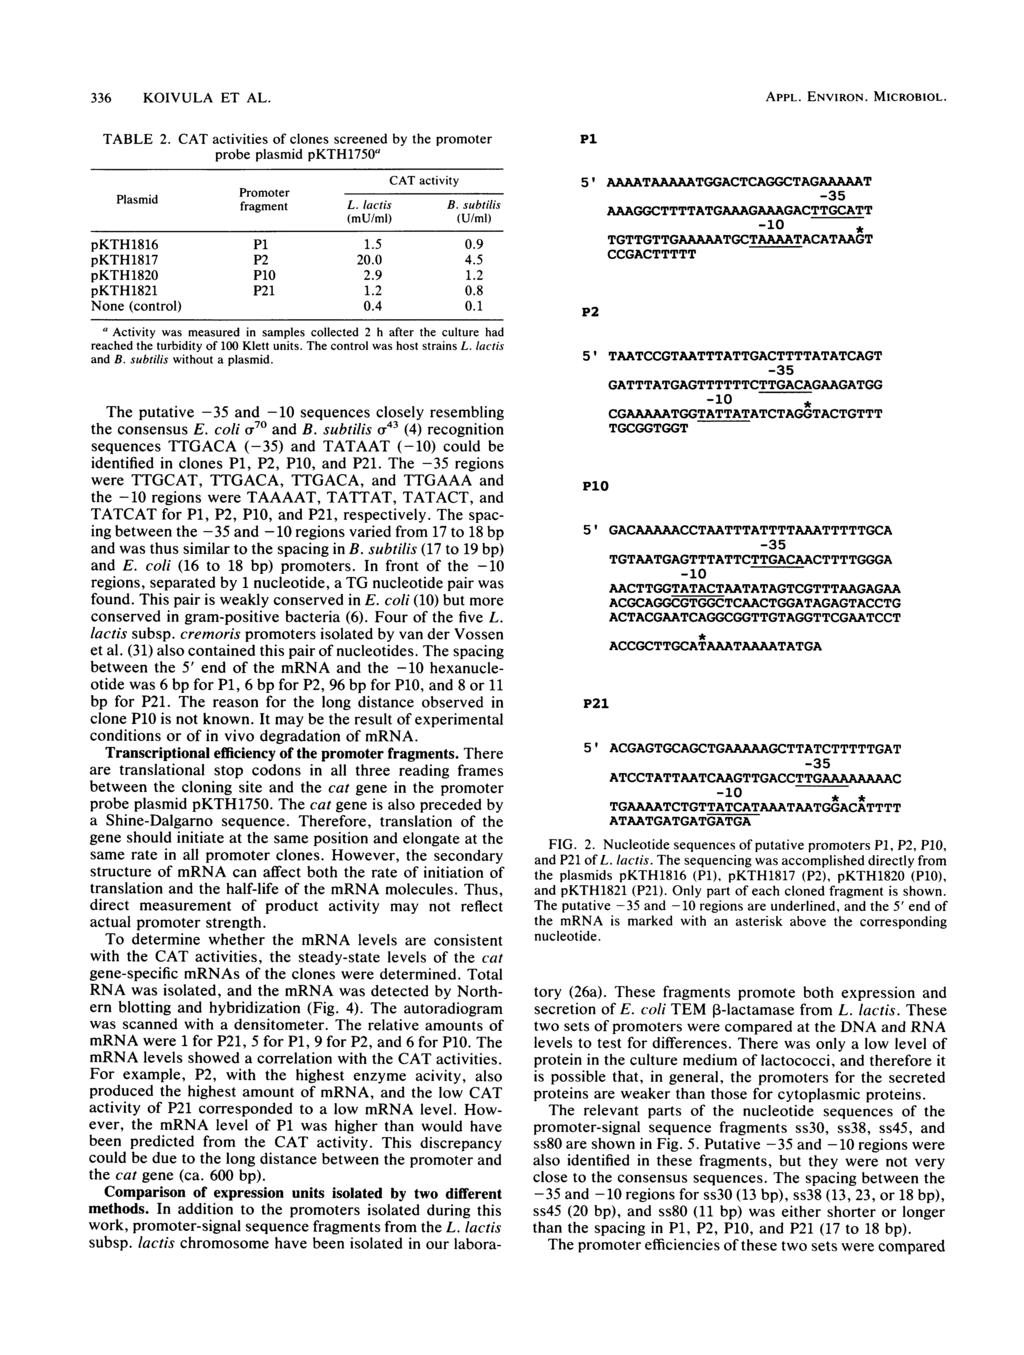 336 KOIVULA ET AL. TABLE 2. Plasmid CAT activities of clones screened by the promoter probe plasmid pkth1750a CAT activity Promoter fragment L. lactis B. subtilis (mu/ml) (U/mi) pkth1816 P1 1.5 0.